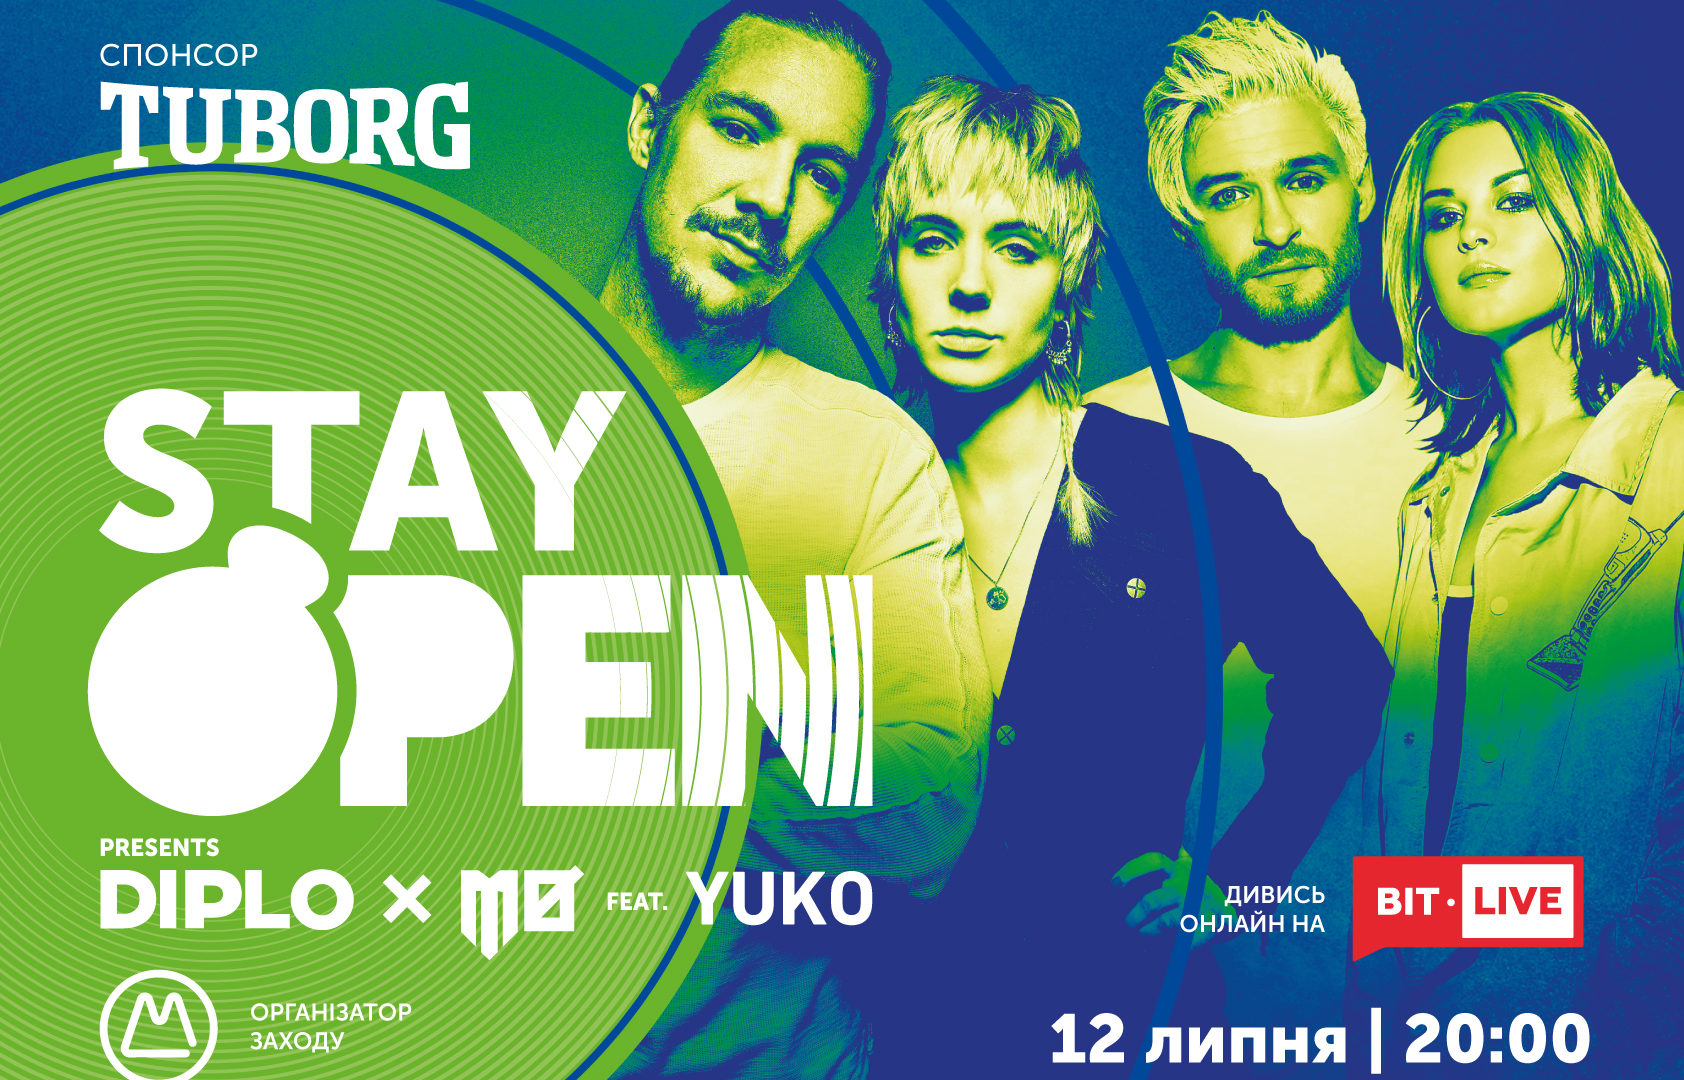 Diplo x MØ объявили о коллаборации  с украинской группой Yuko  для трека Stay Open